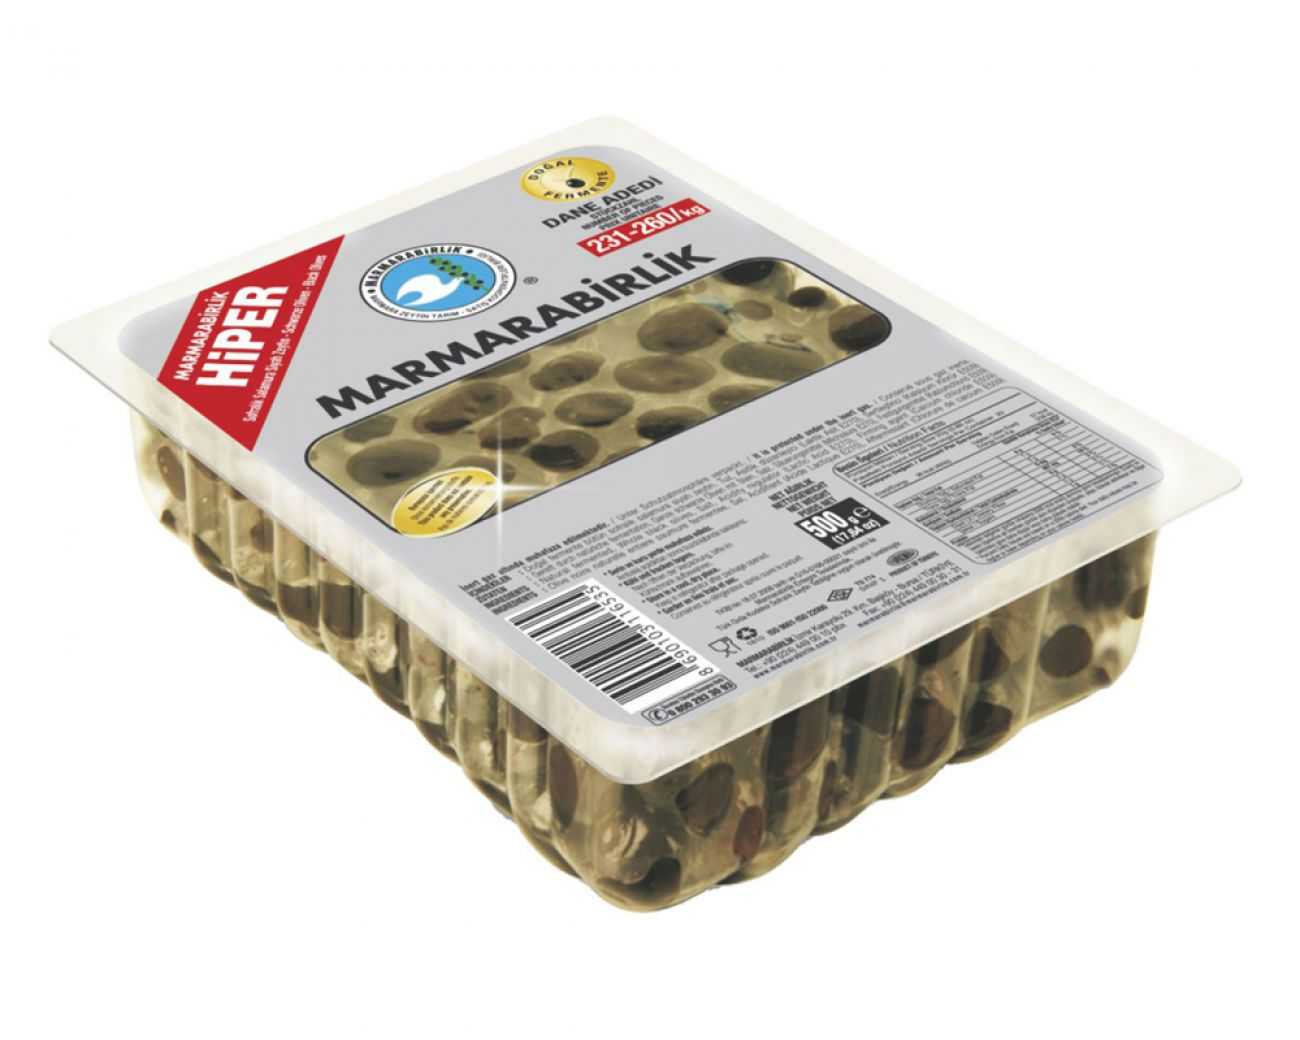 Marmara Birlik Gemlik Hiper Black Olives L Silver (800G) - Aytac Foods